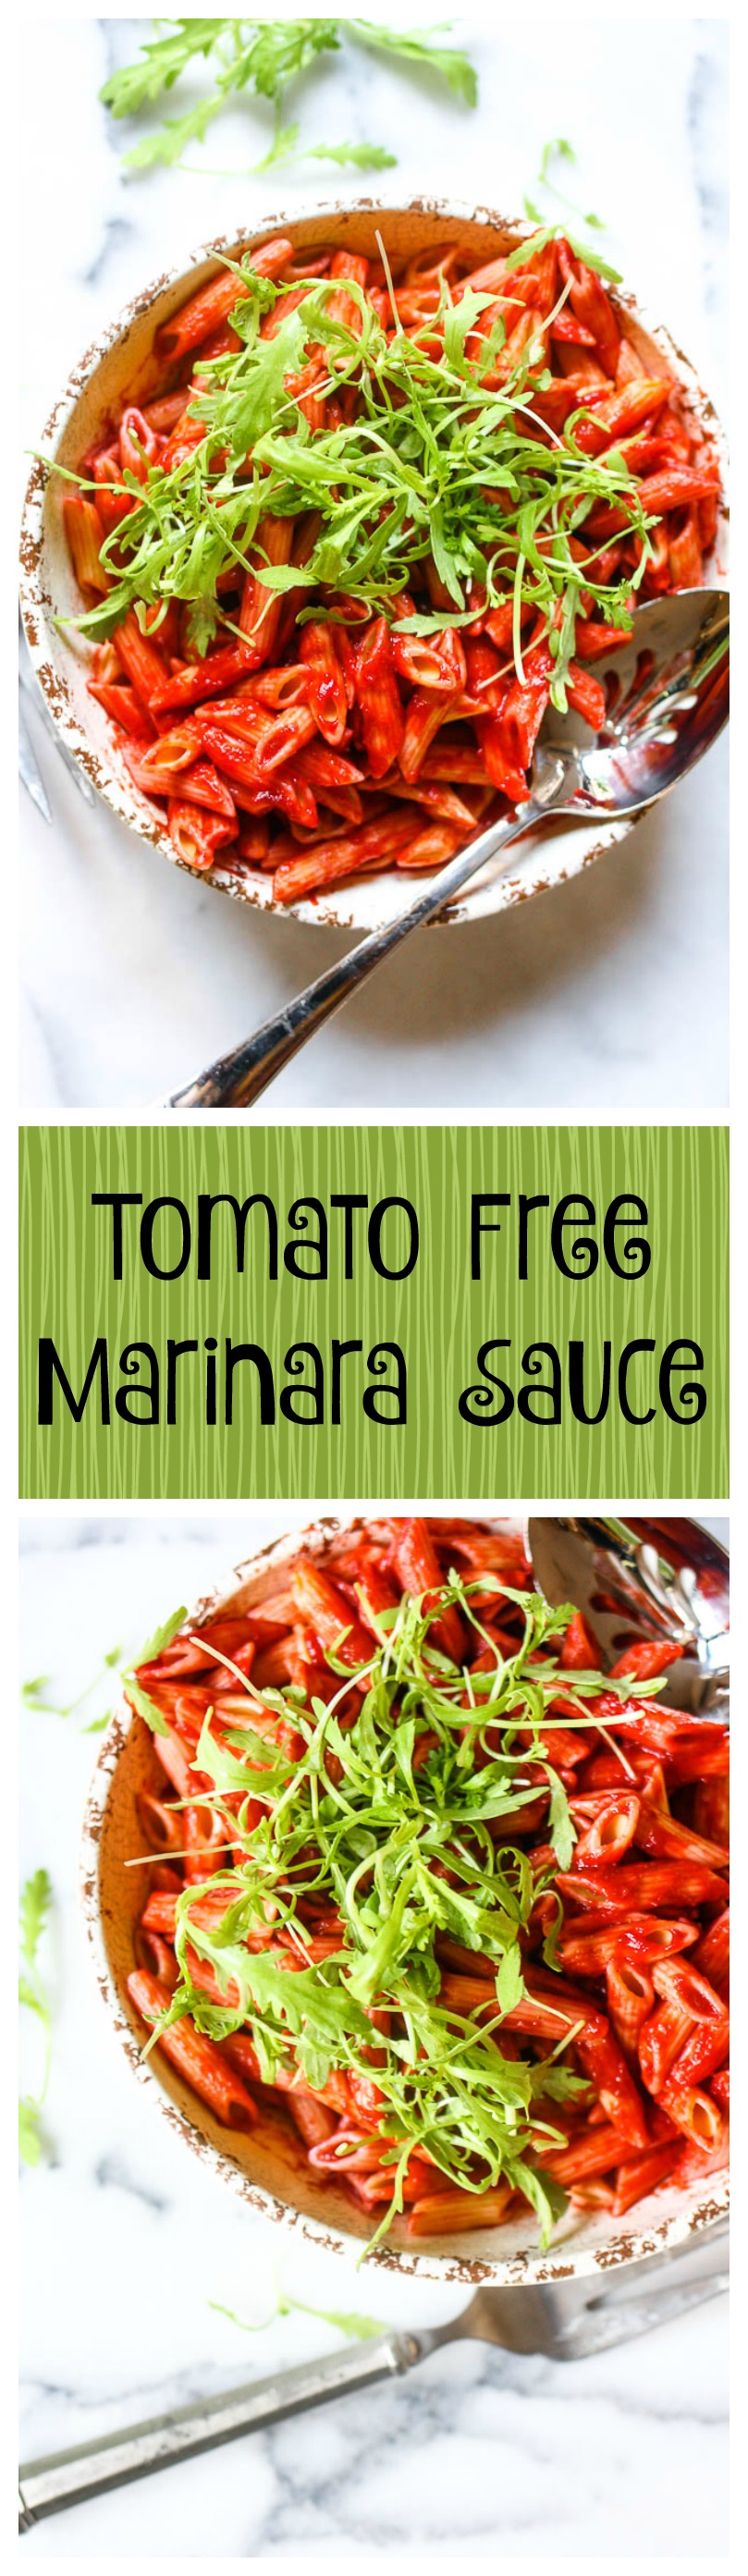 tomato free marinara sauce